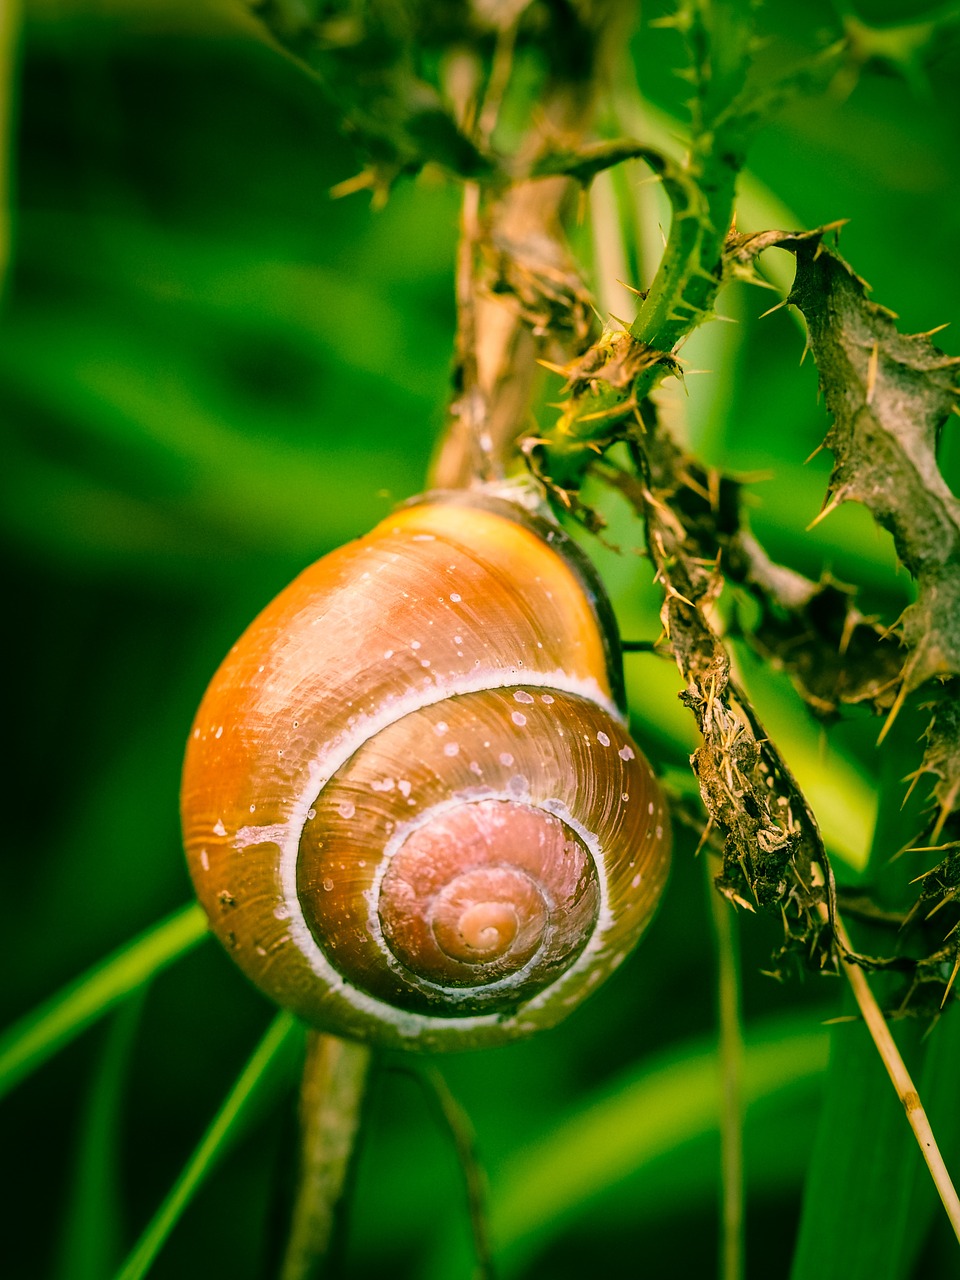 snail shell nature free photo